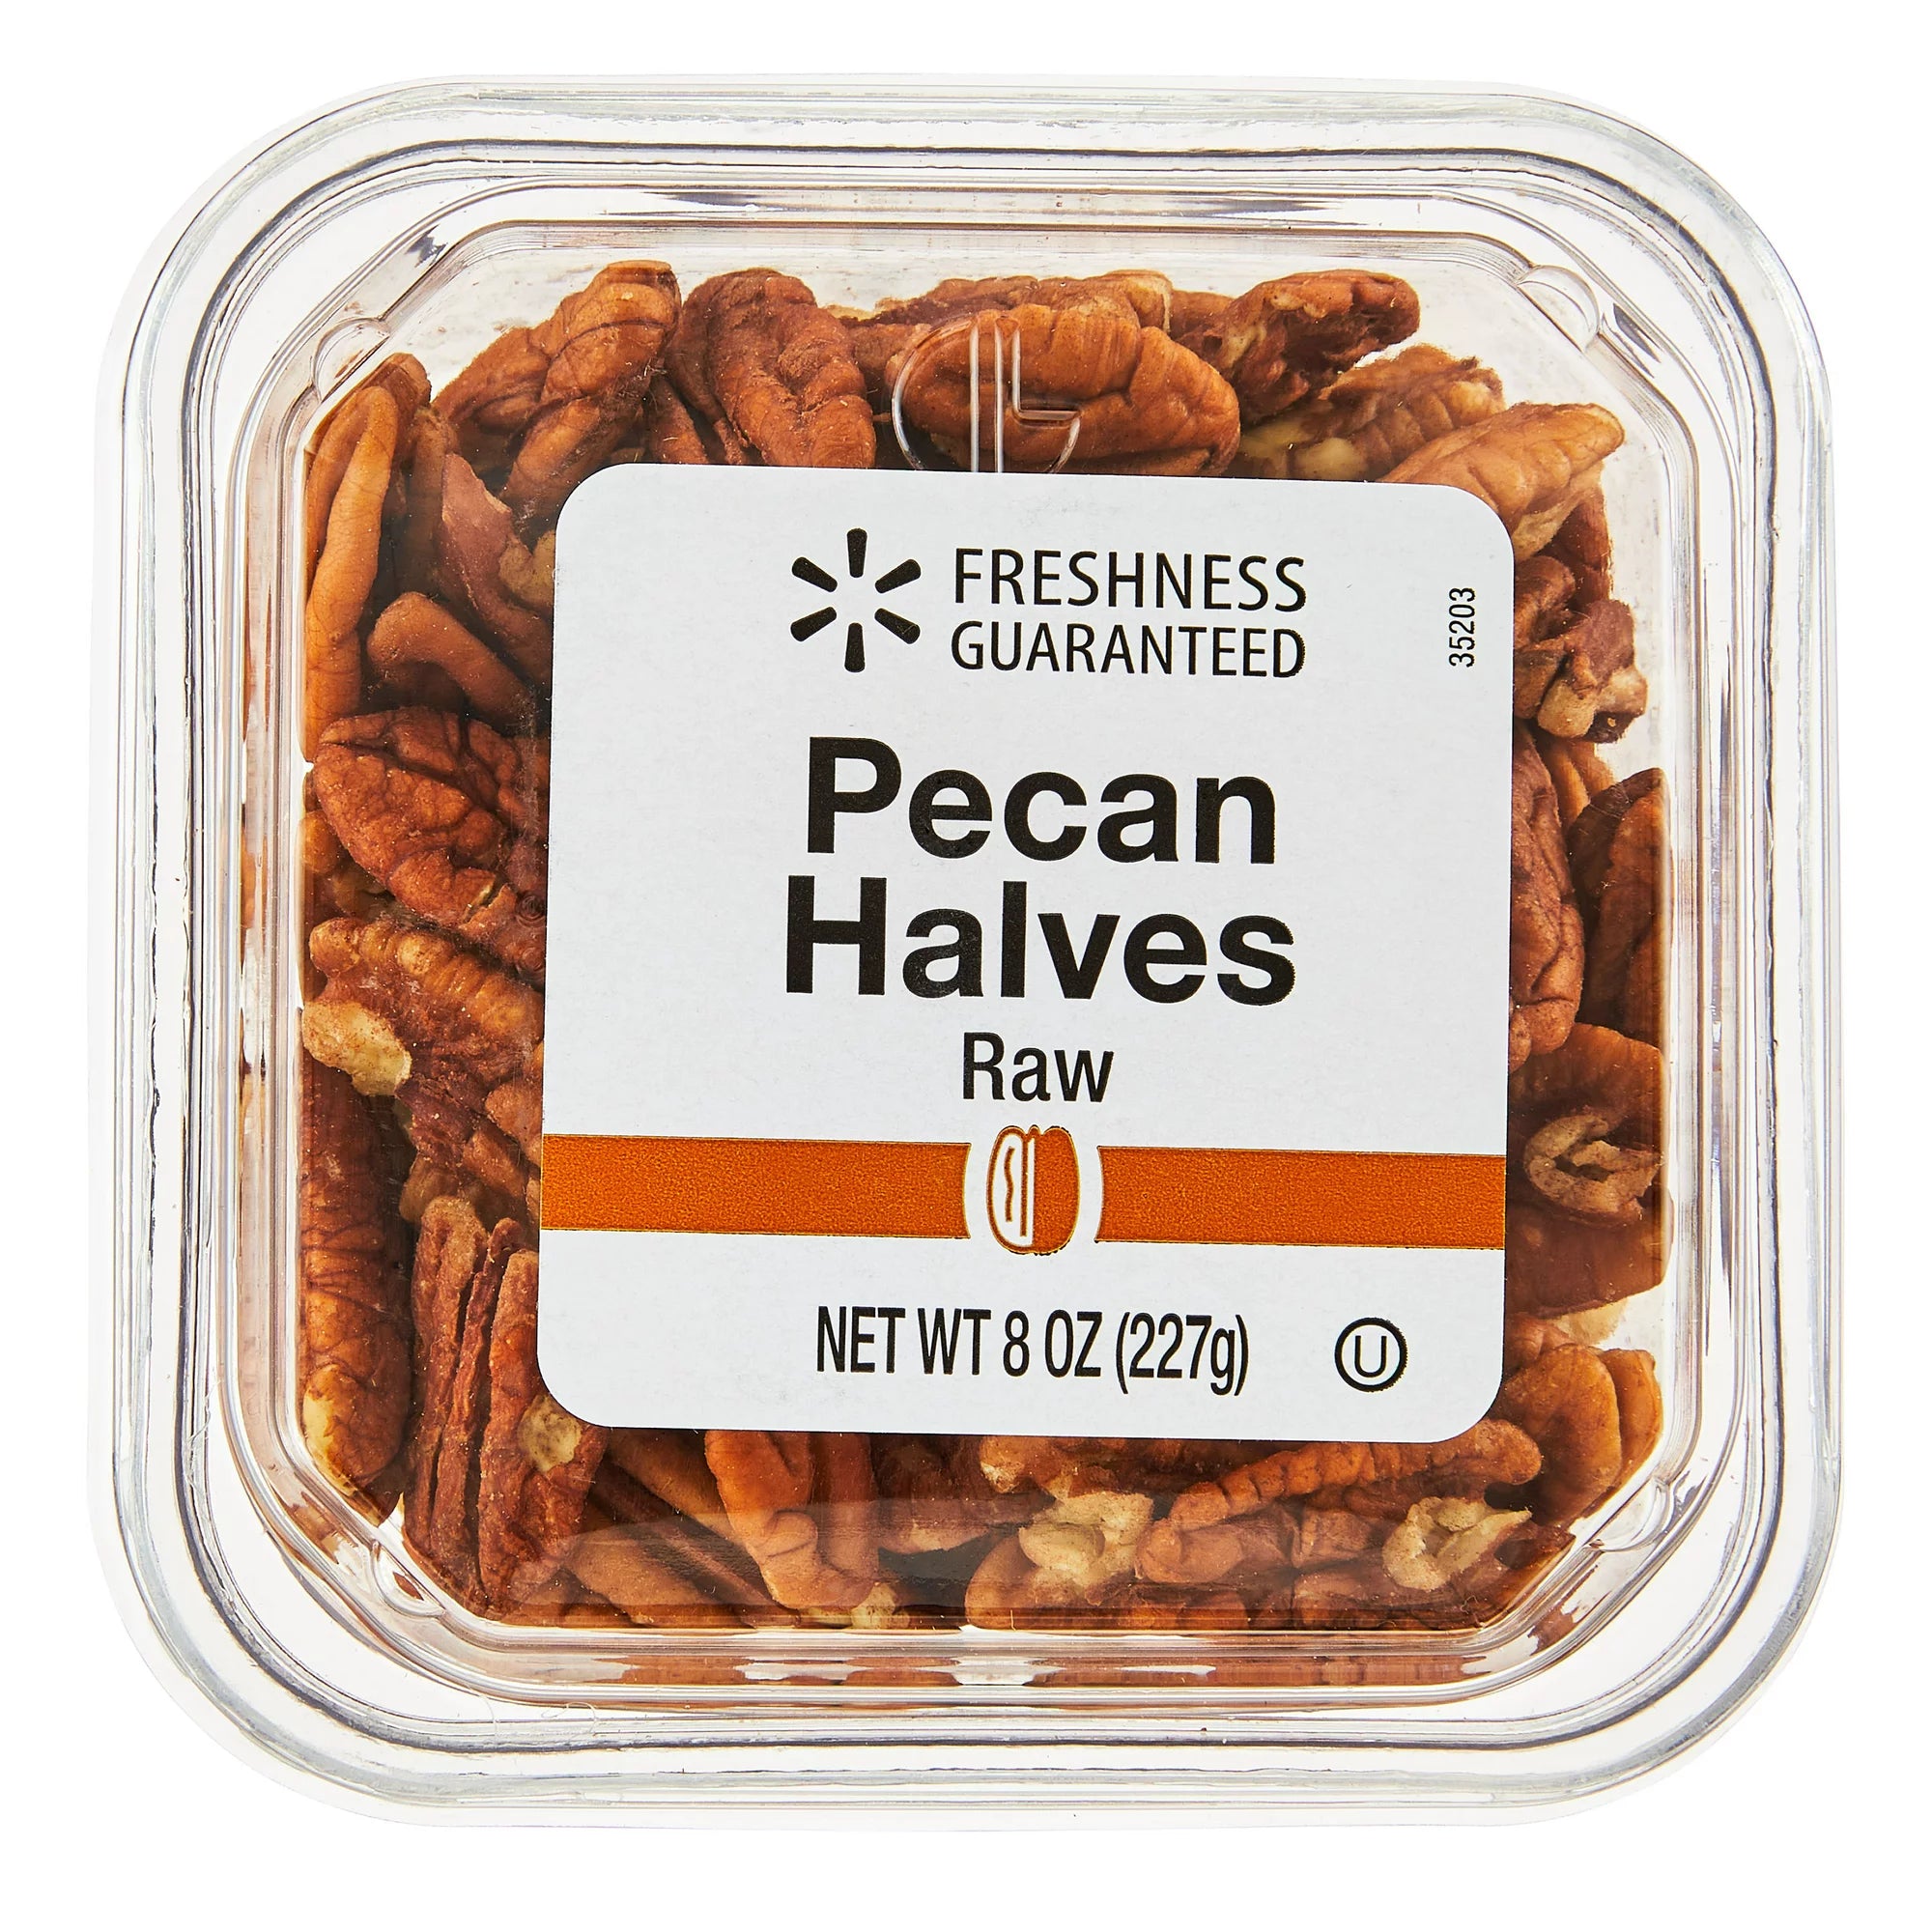 Freshness Guaranteed Raw Pecan Halves, 8 oz